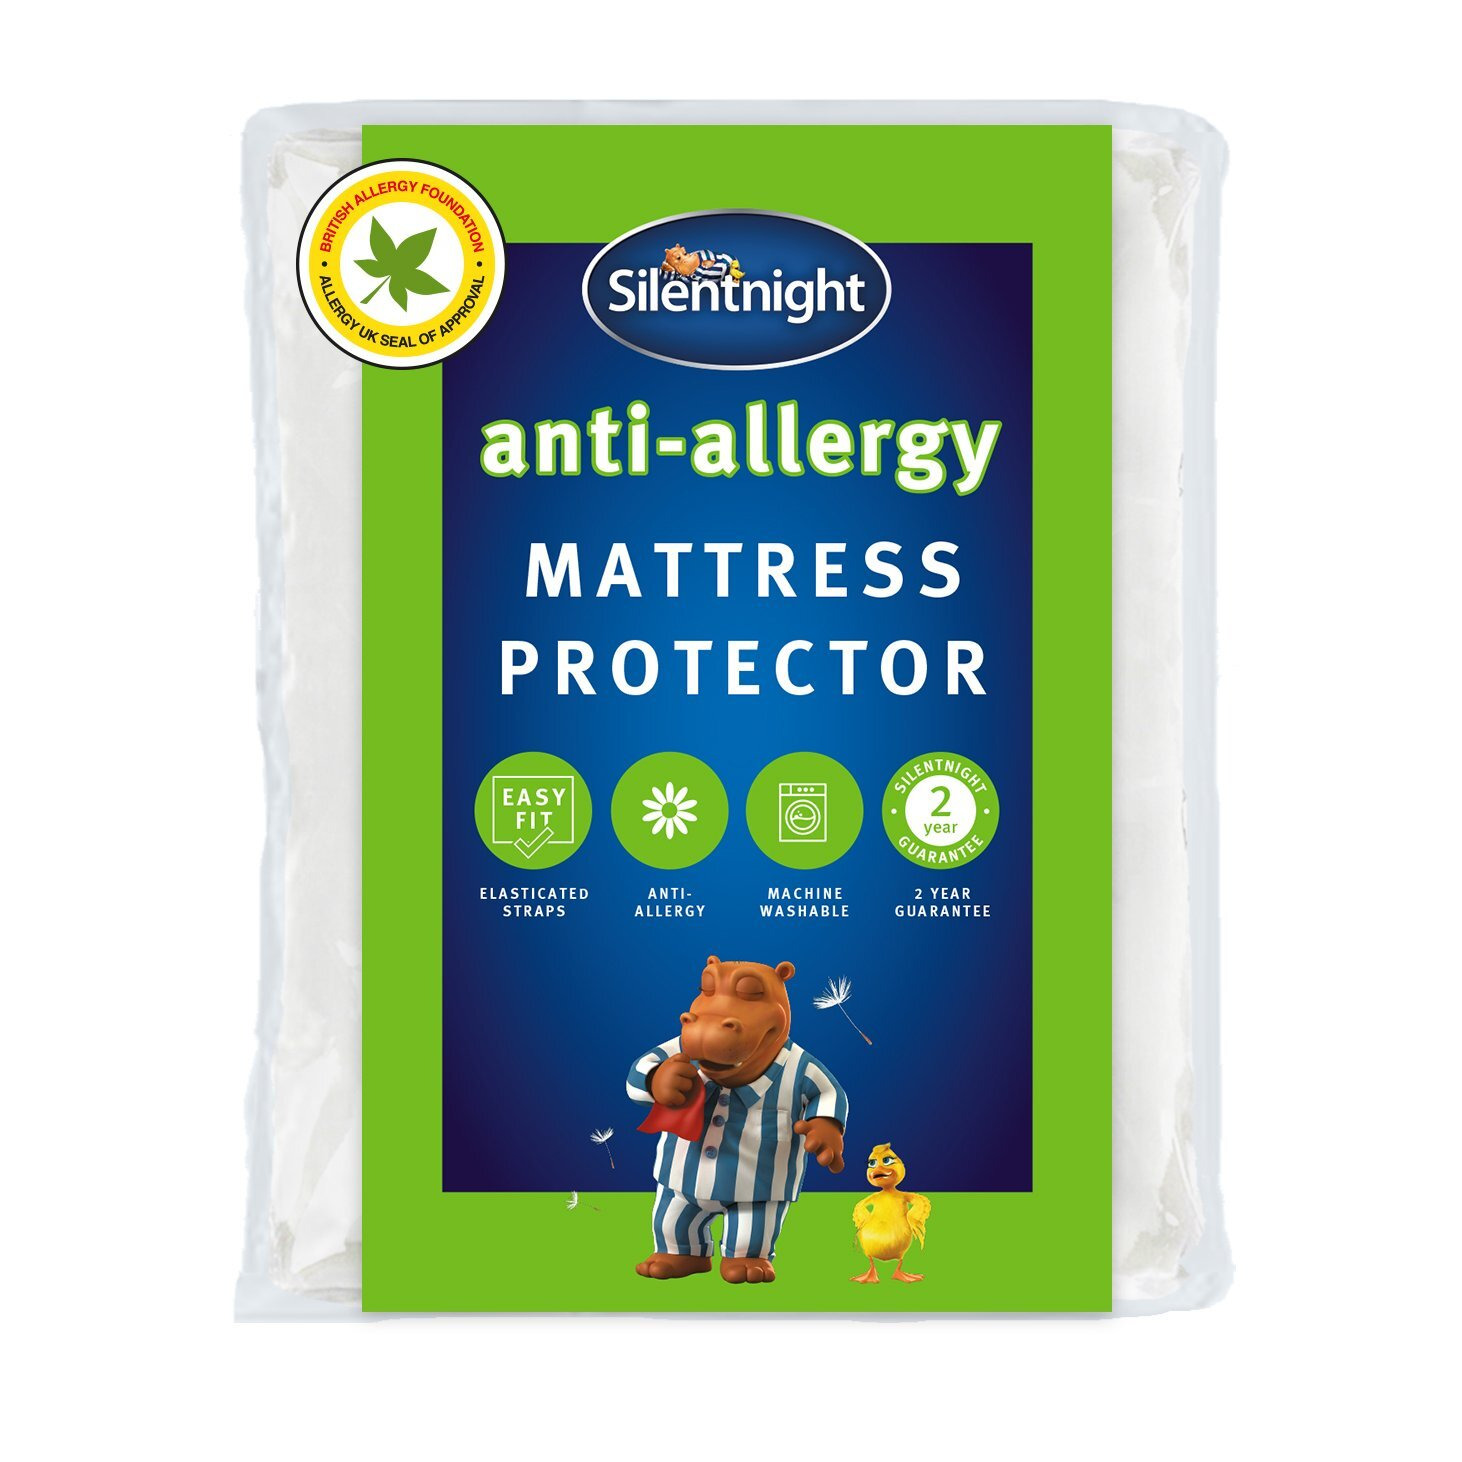 Silentnight Anti-Allergy Mattress Protector - Kingsize - image 1